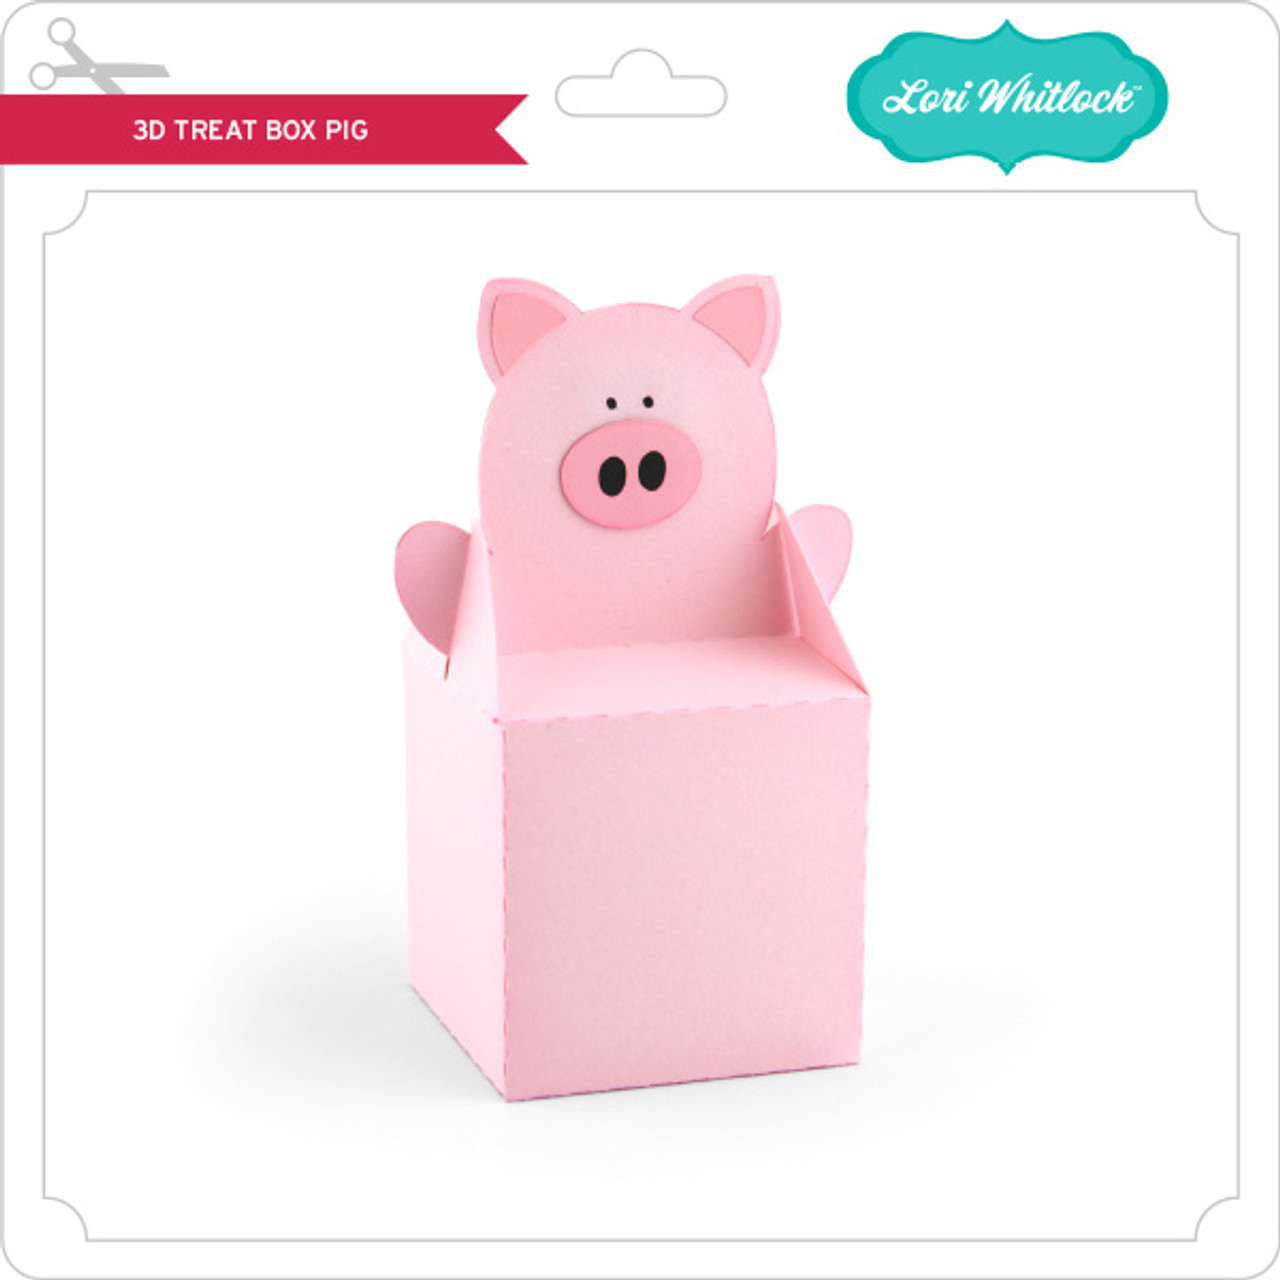 Pig Pun Valentine's Day Printable Cards, Kids Valentines Day Gifts, Piggy  Valentines Treats